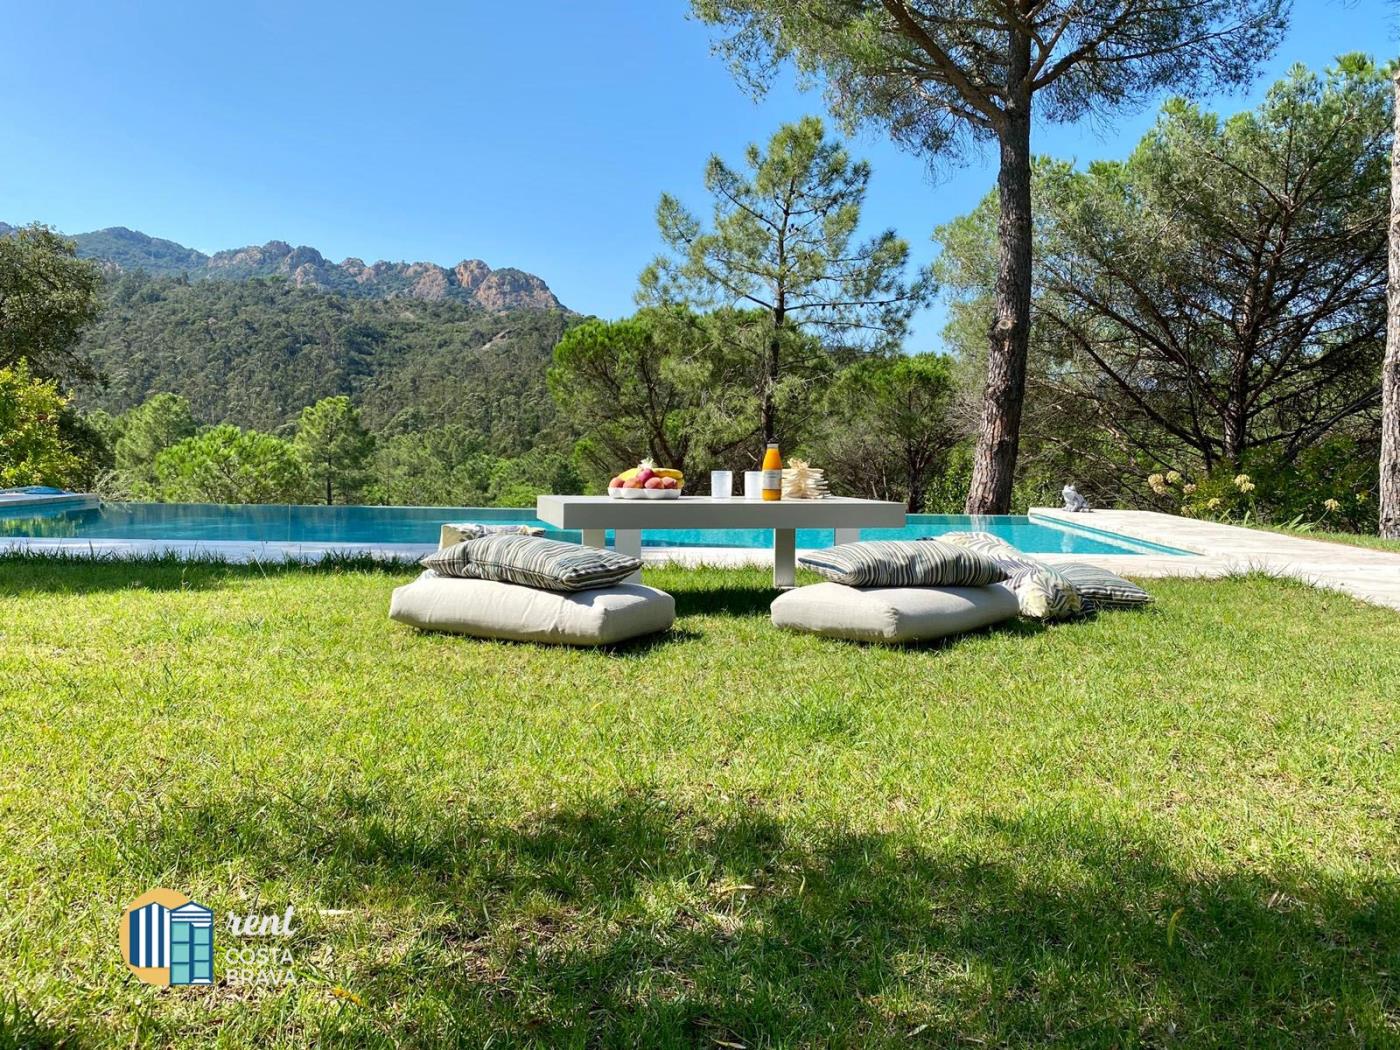 Casa Maravilla dans le Golf Costa Brava avec piscine à débordement privée. à Santa Cristina d'Aro